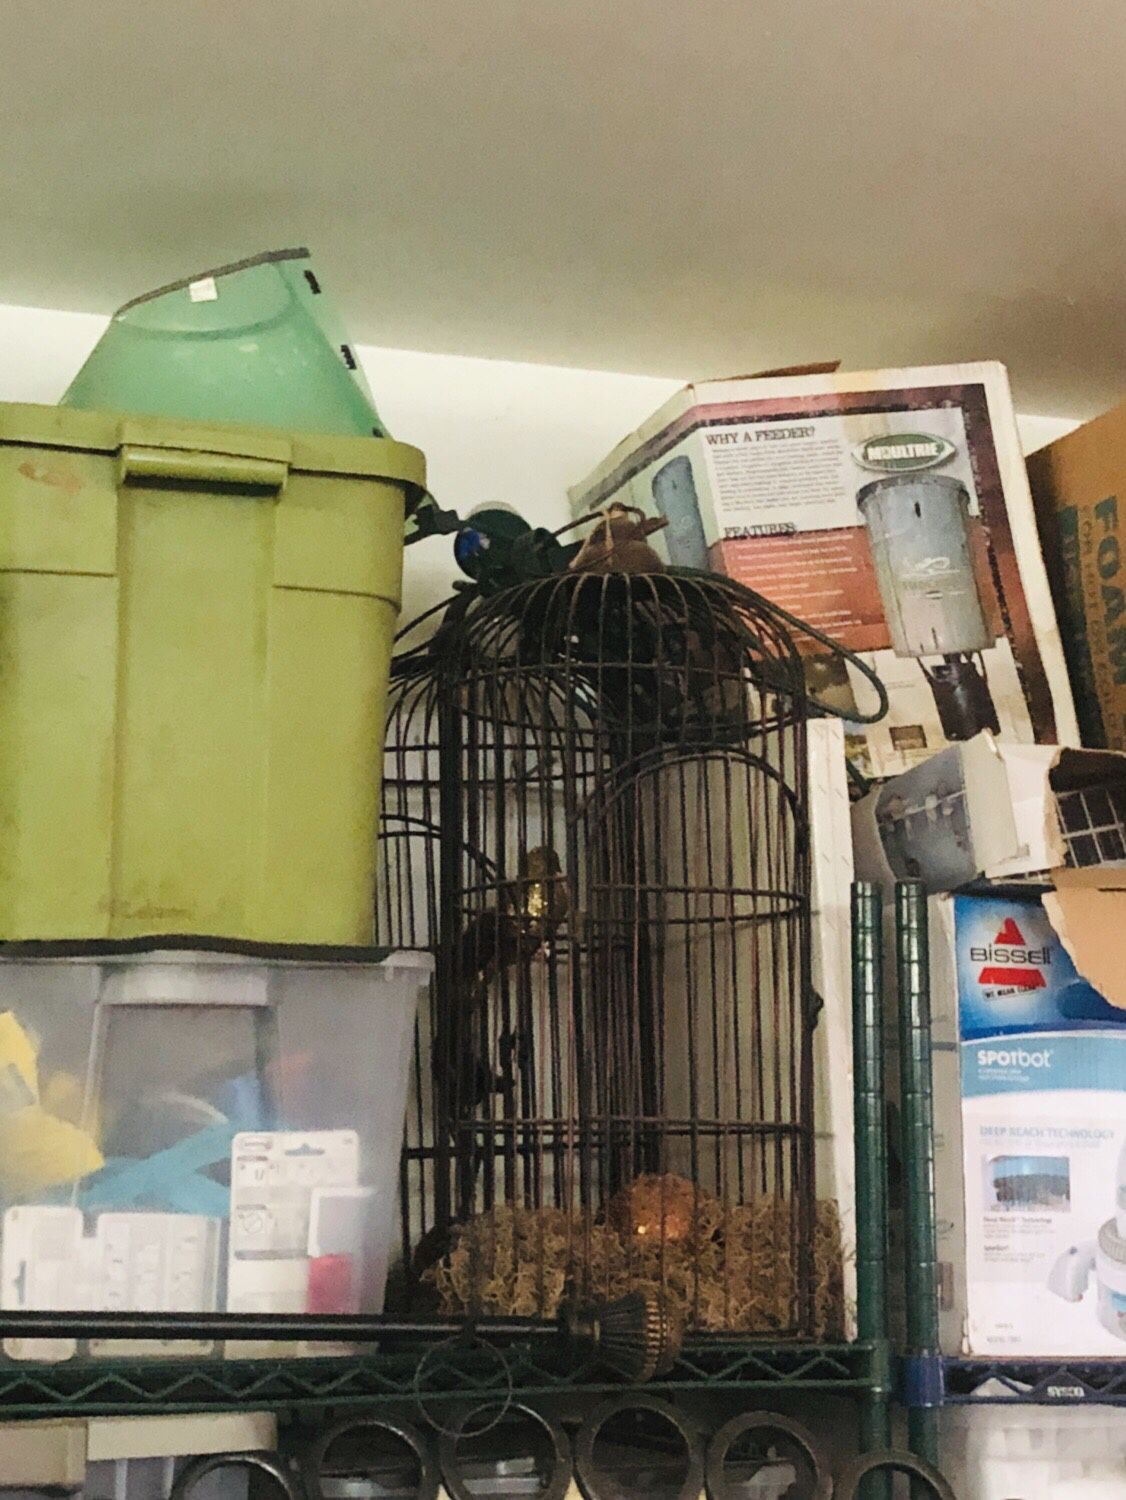 Bird cage decor!